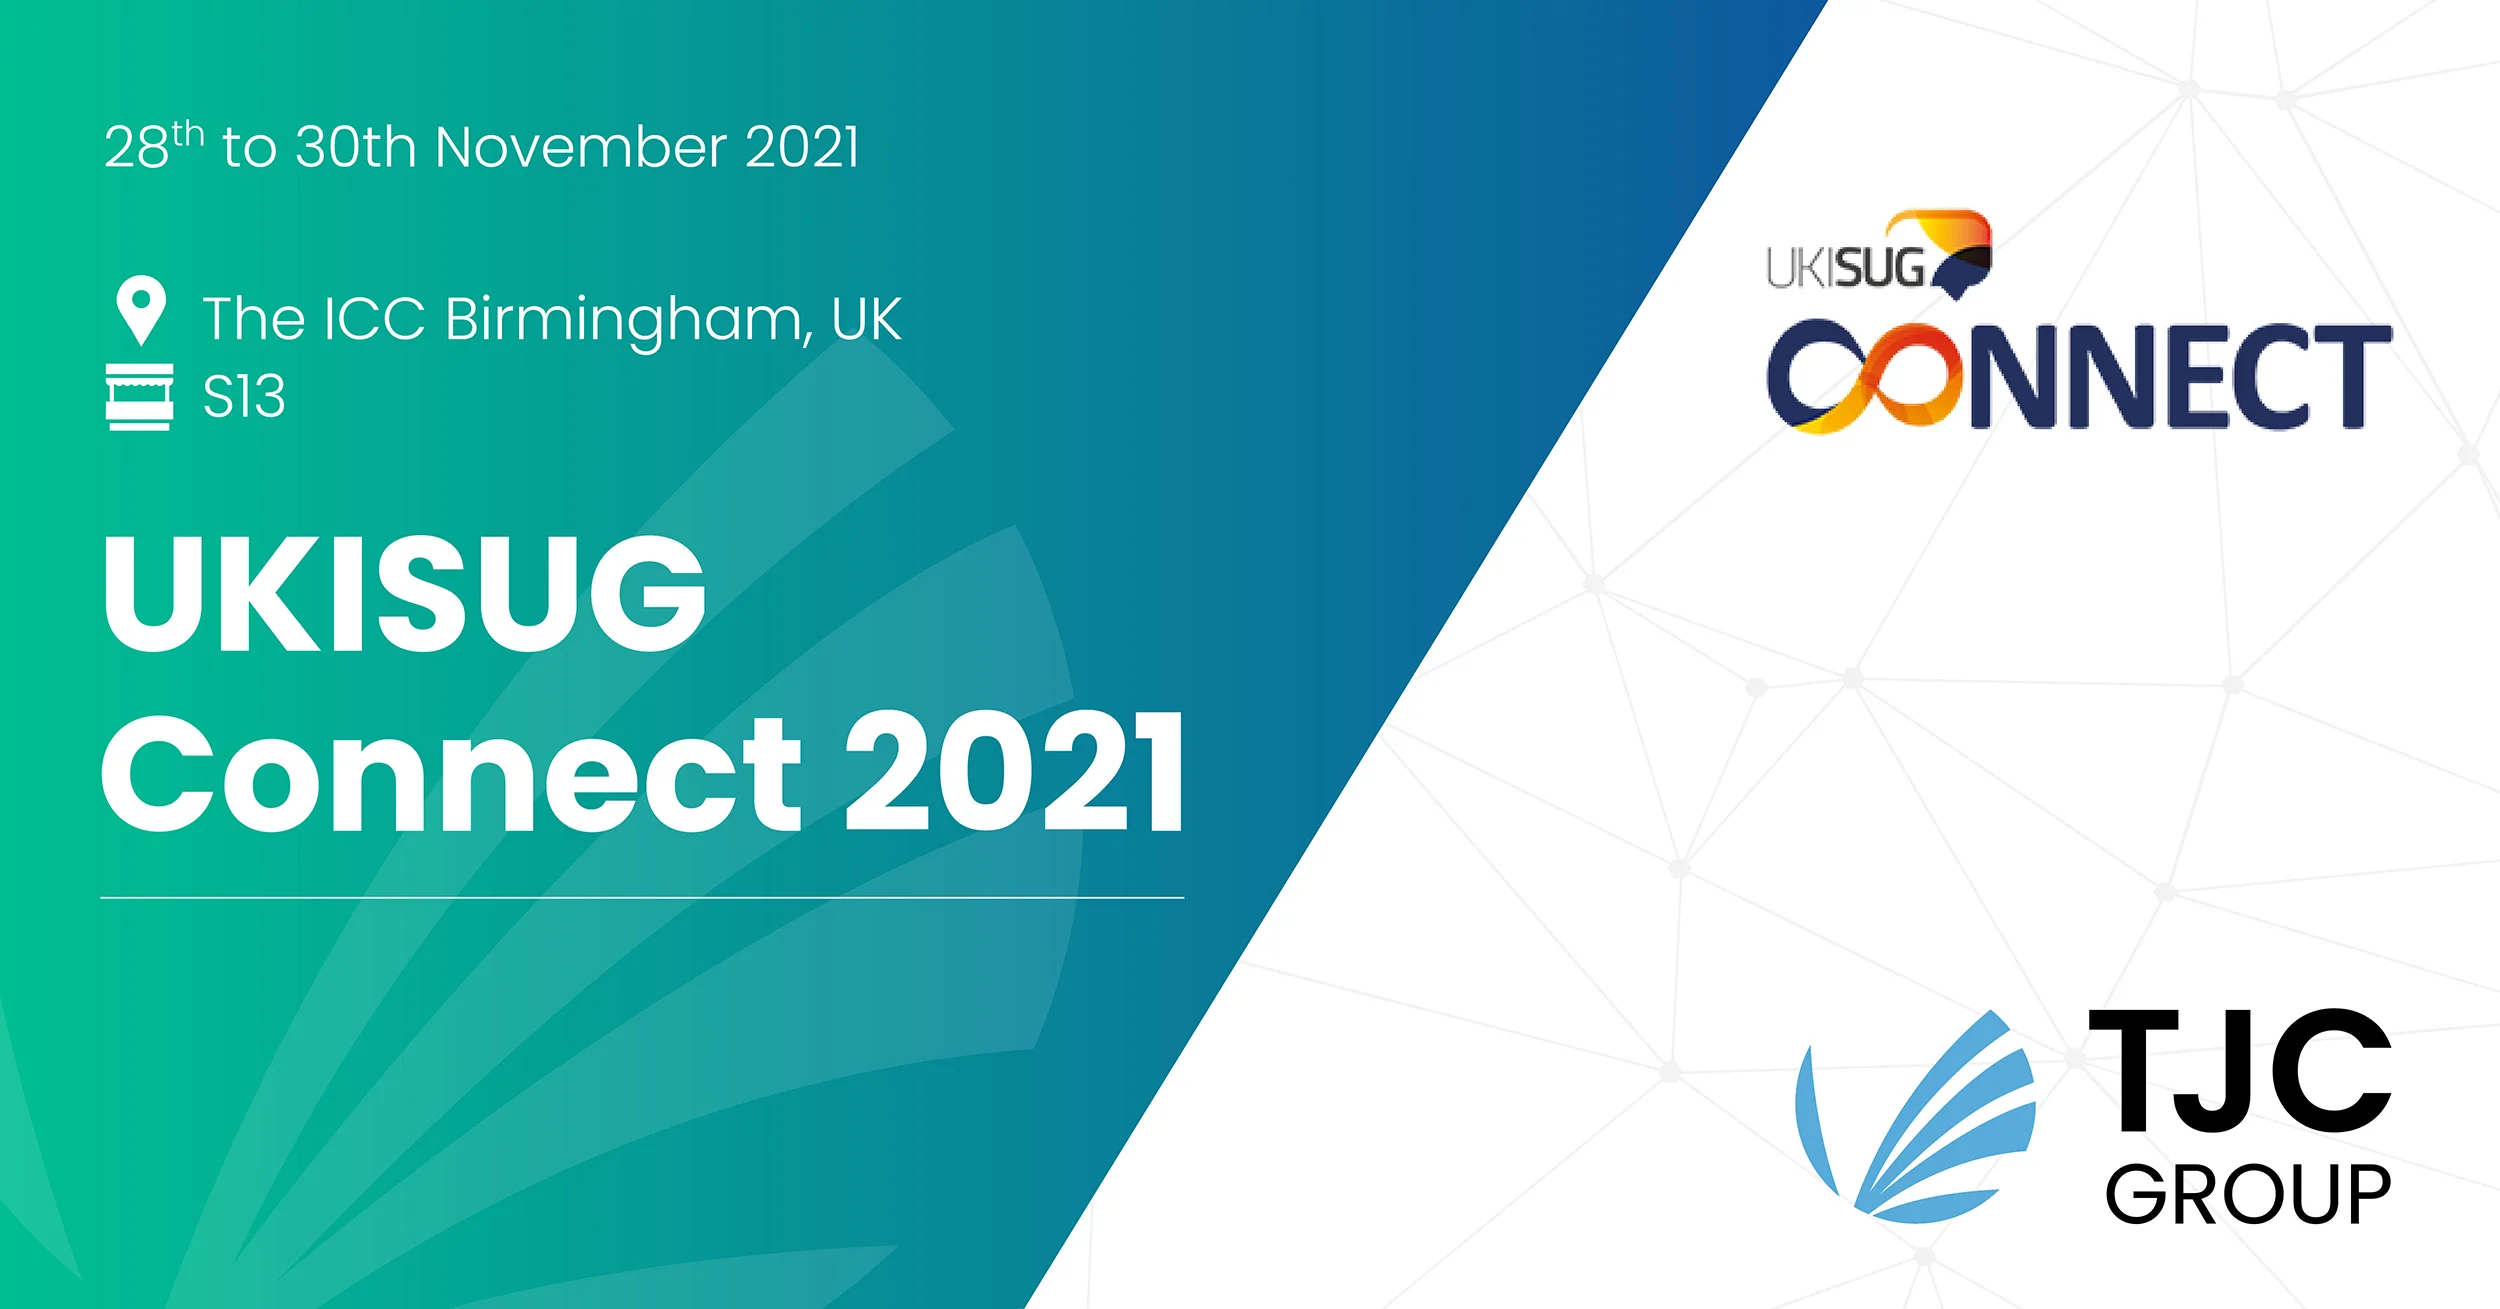 UKISUG Connect 2021 Event | TJC Group